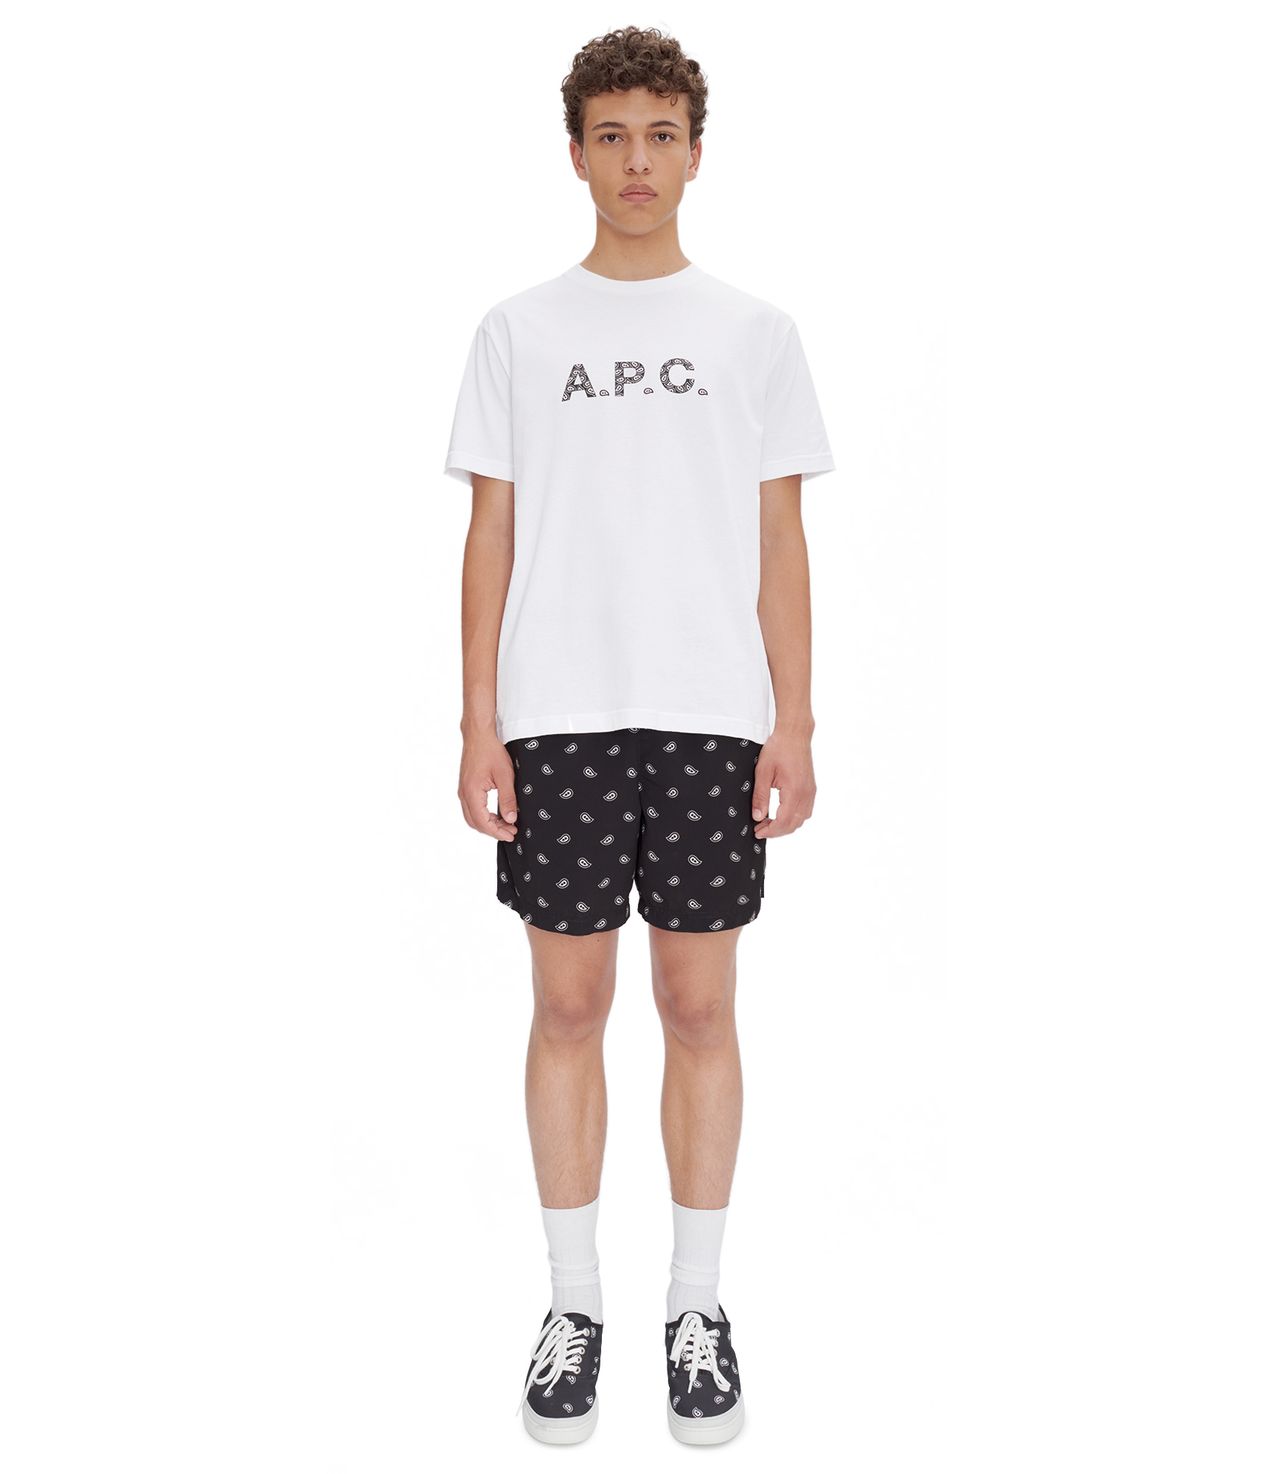 James T-shirt WHITE/BLACK APC